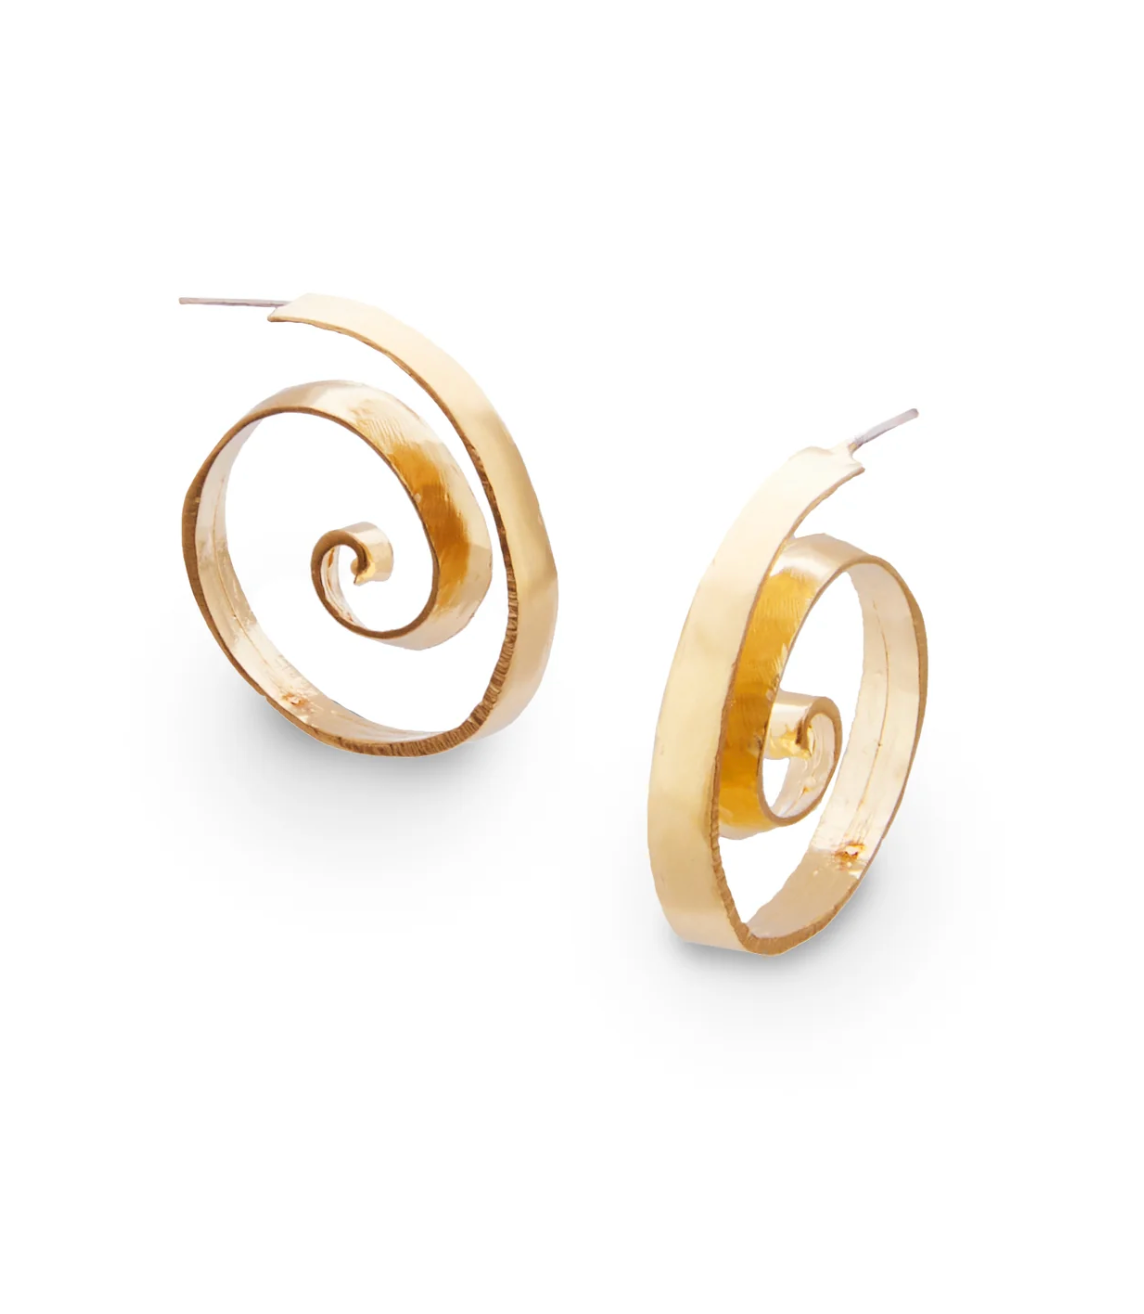 Cynthia/Swirl Earrings